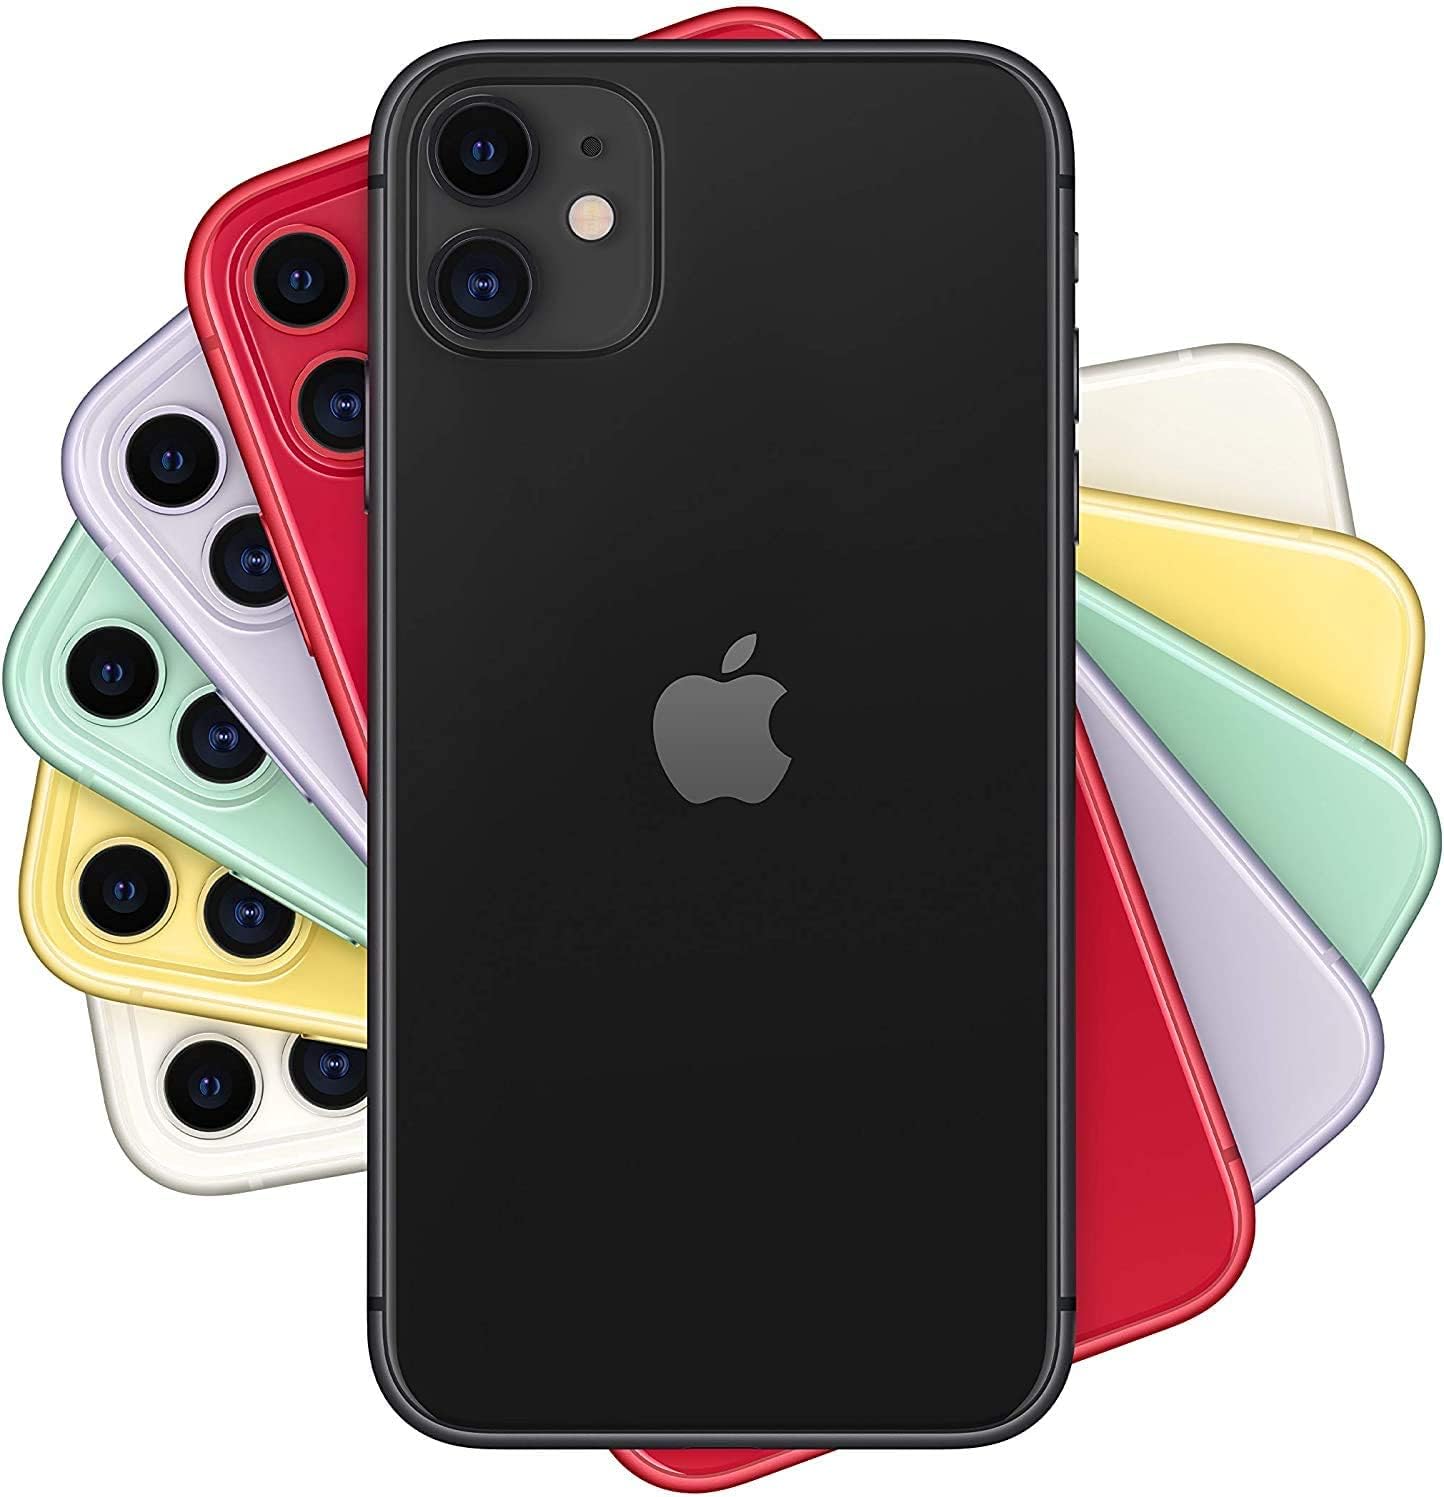 Apple iPhone 11 (64GB) - Black